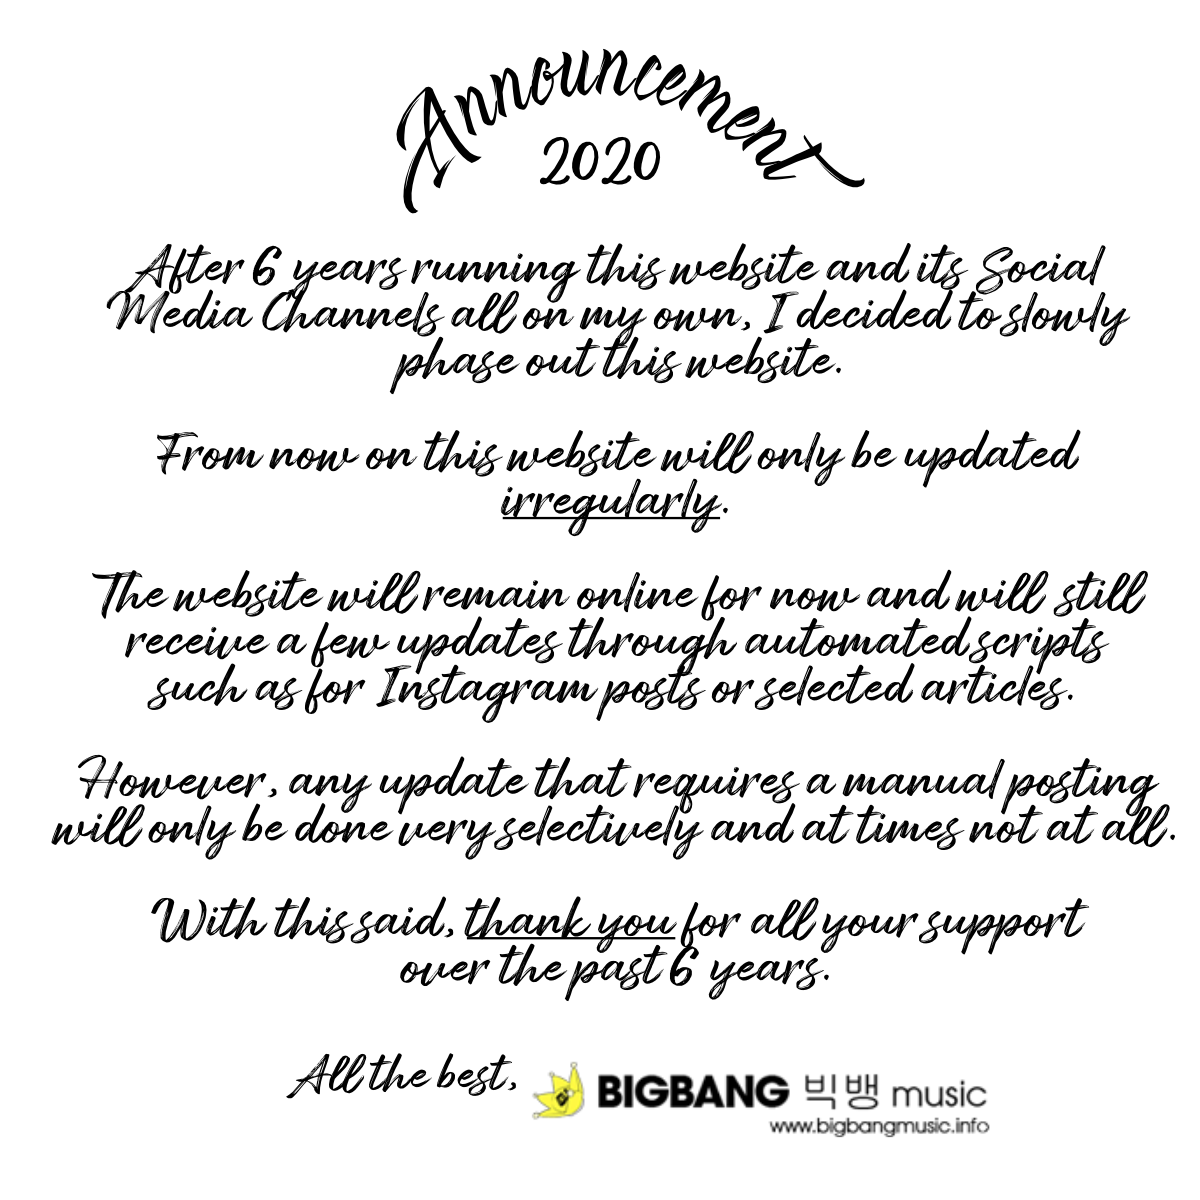 BIGBANGmusic 2020 Announcement